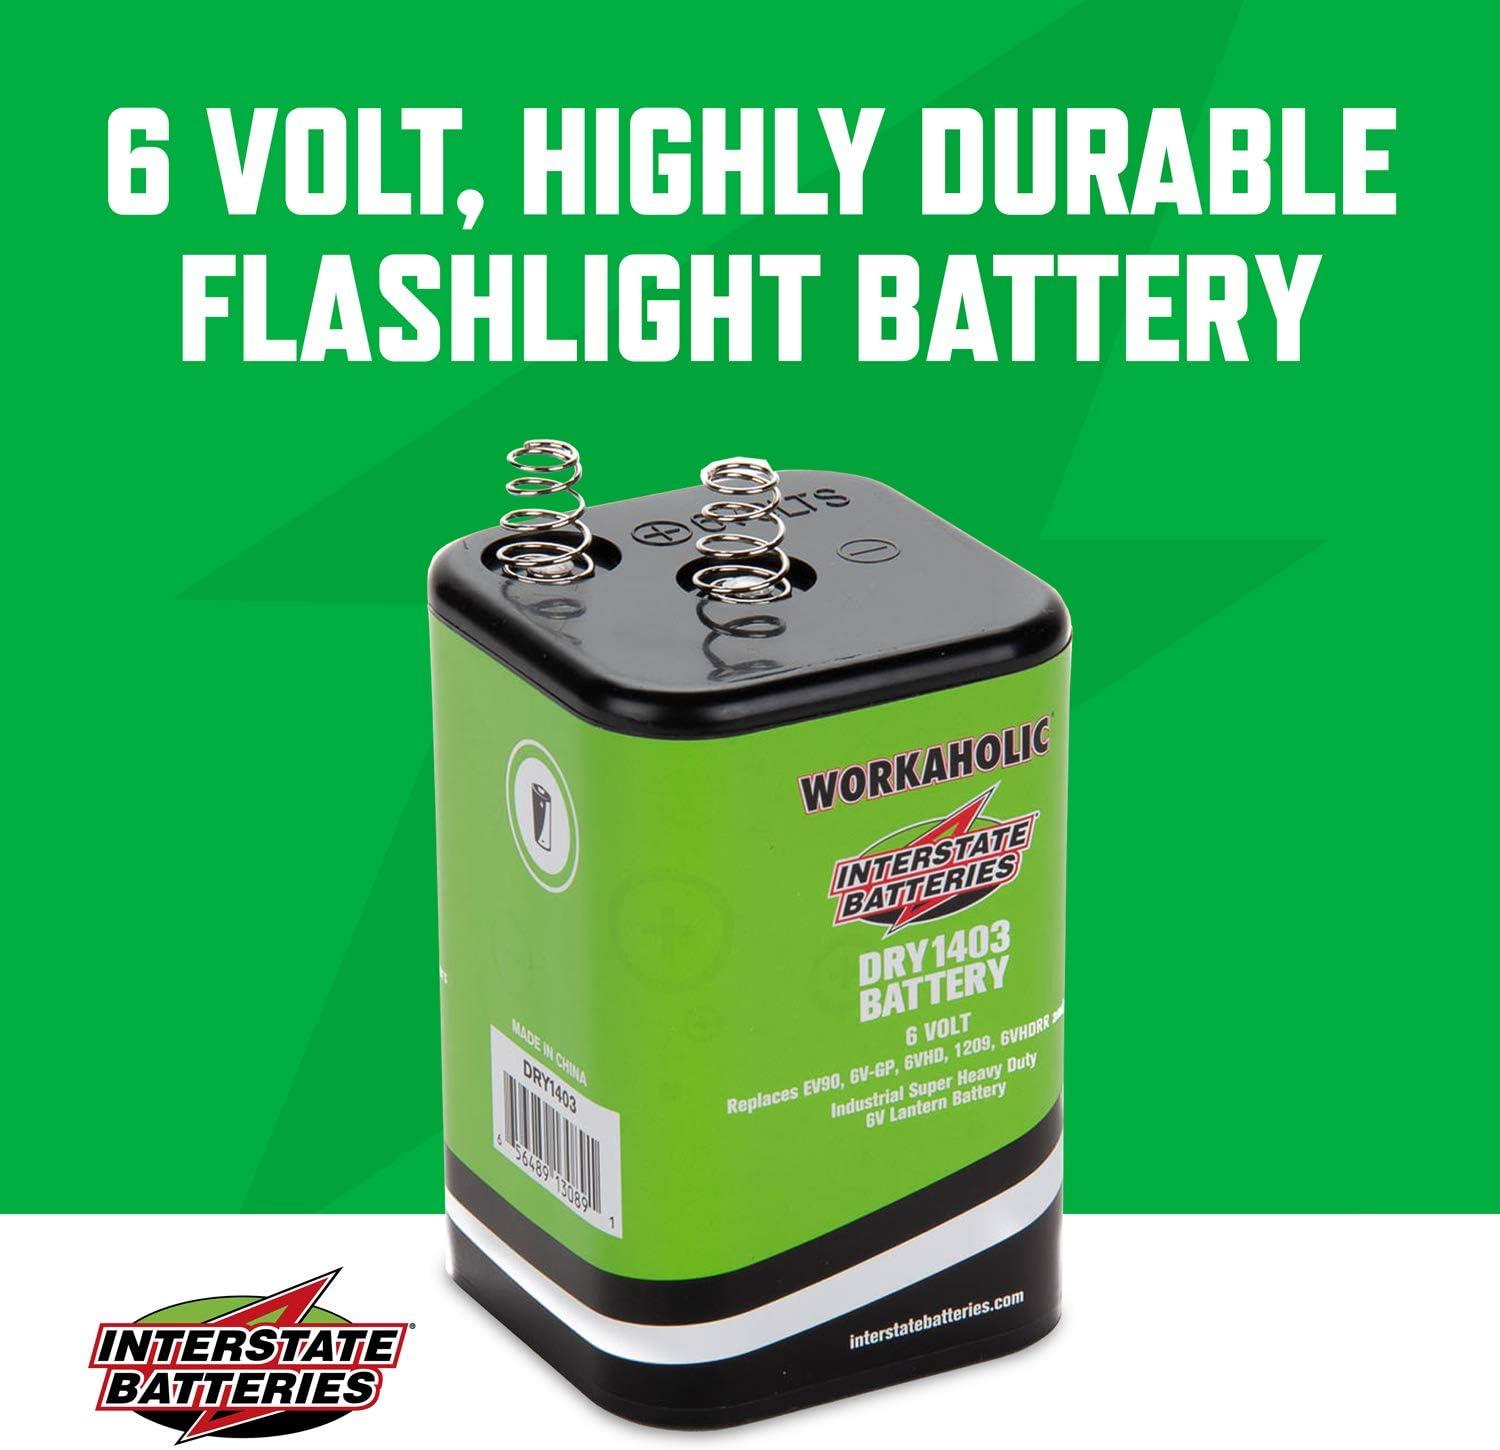 Interstate Batteries 6V HD Lantern Flashlight Battery (DRY1403) 6 Volt 7000  mAH Square Shape Lantern Light (Workaholic) Camping, Hiking, Outdoors,  Household (Spring Terminals) 6V, 1-Count